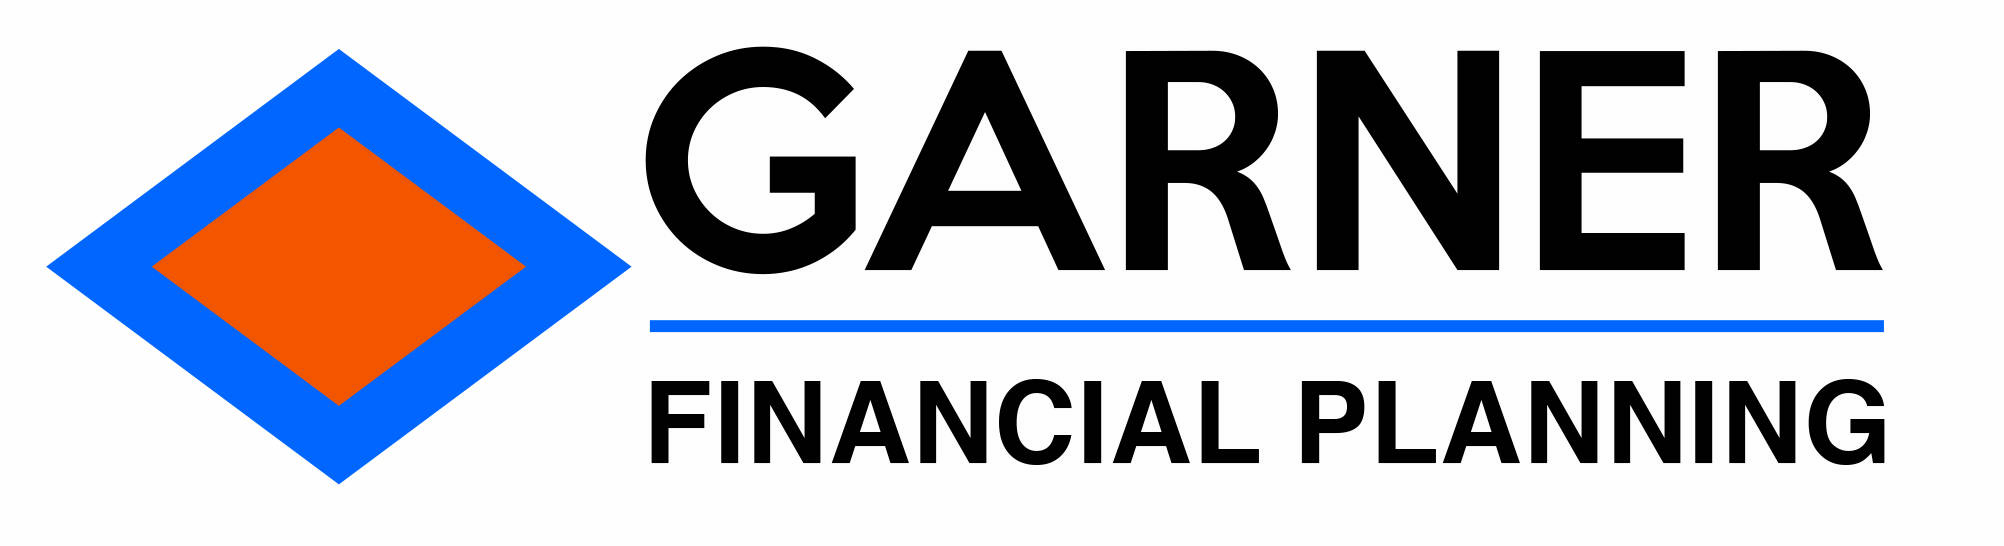 Garner Financial Planning